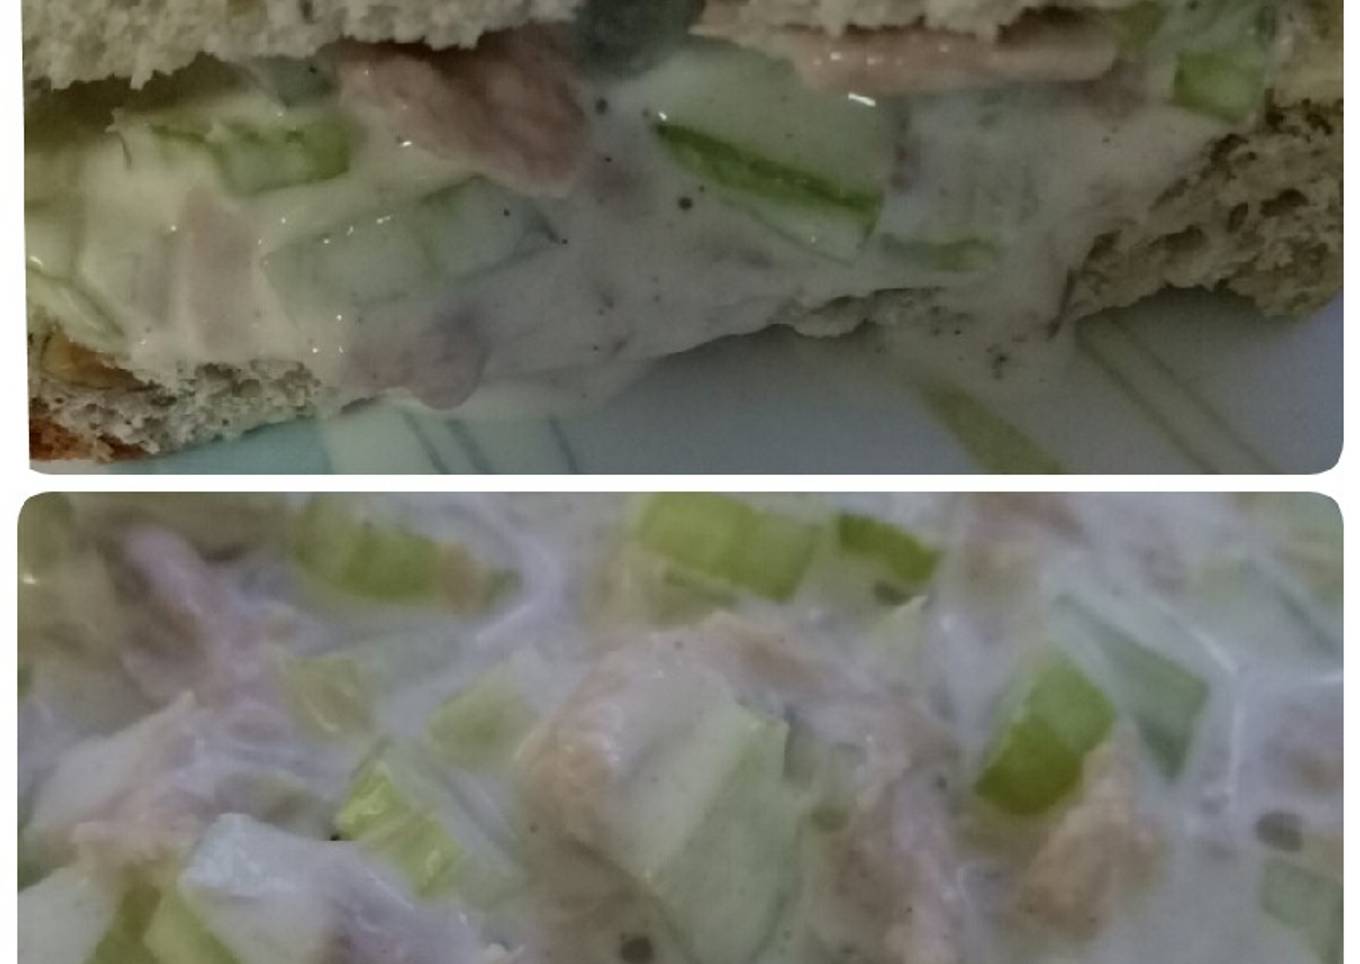 Tuna mayones, celery salad